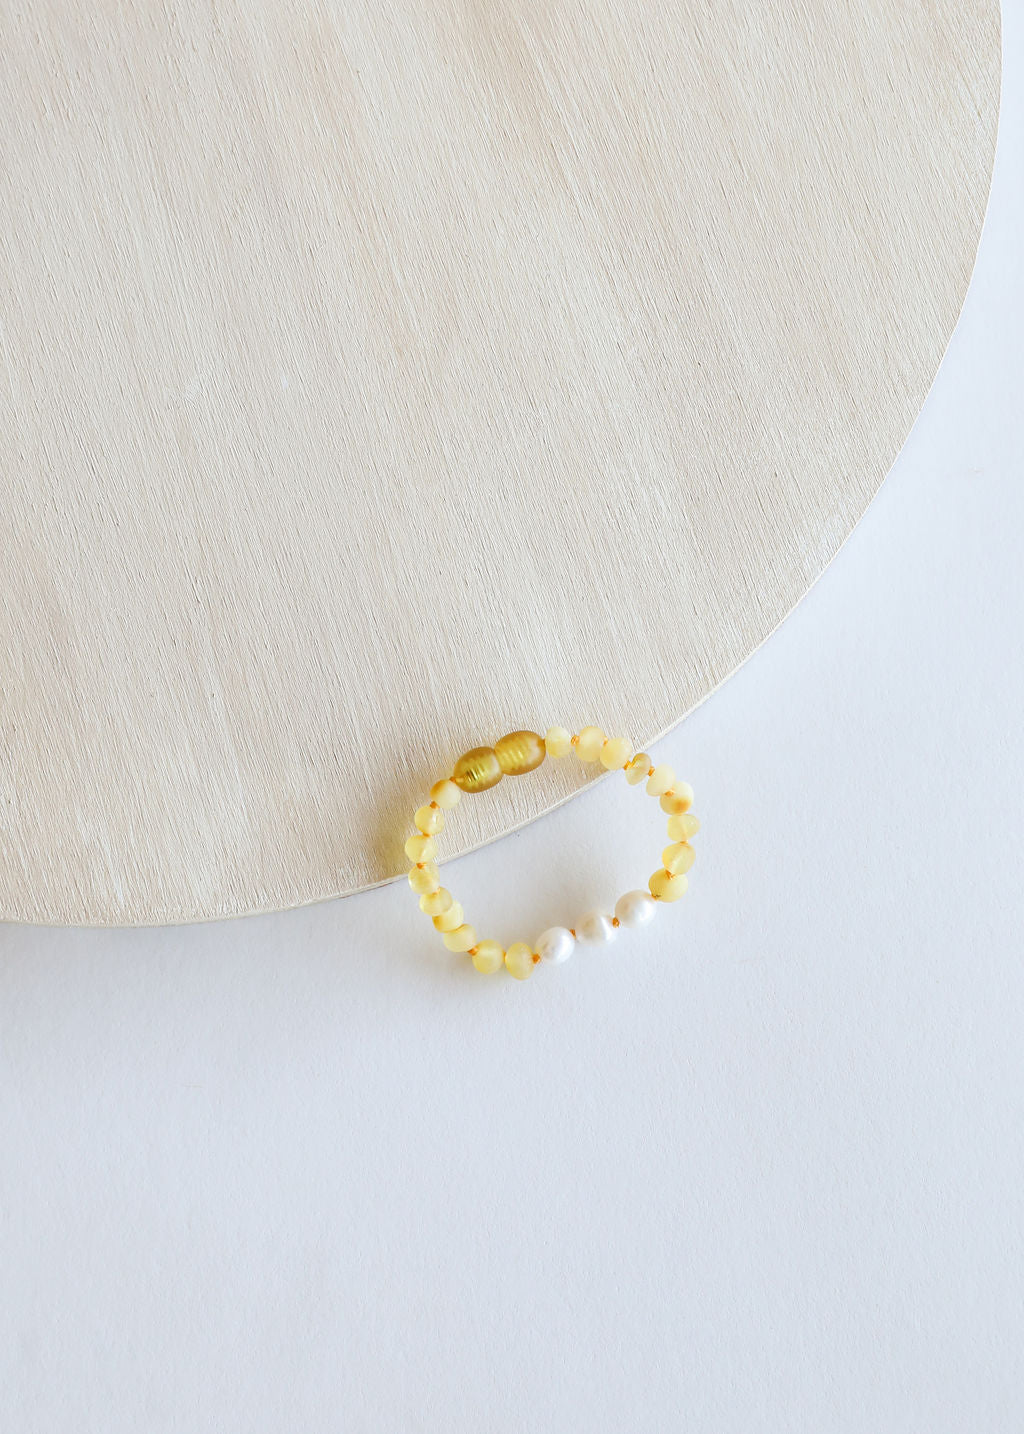 Raw Honey Baltic Amber + Pearls || Anklet or Bracelet